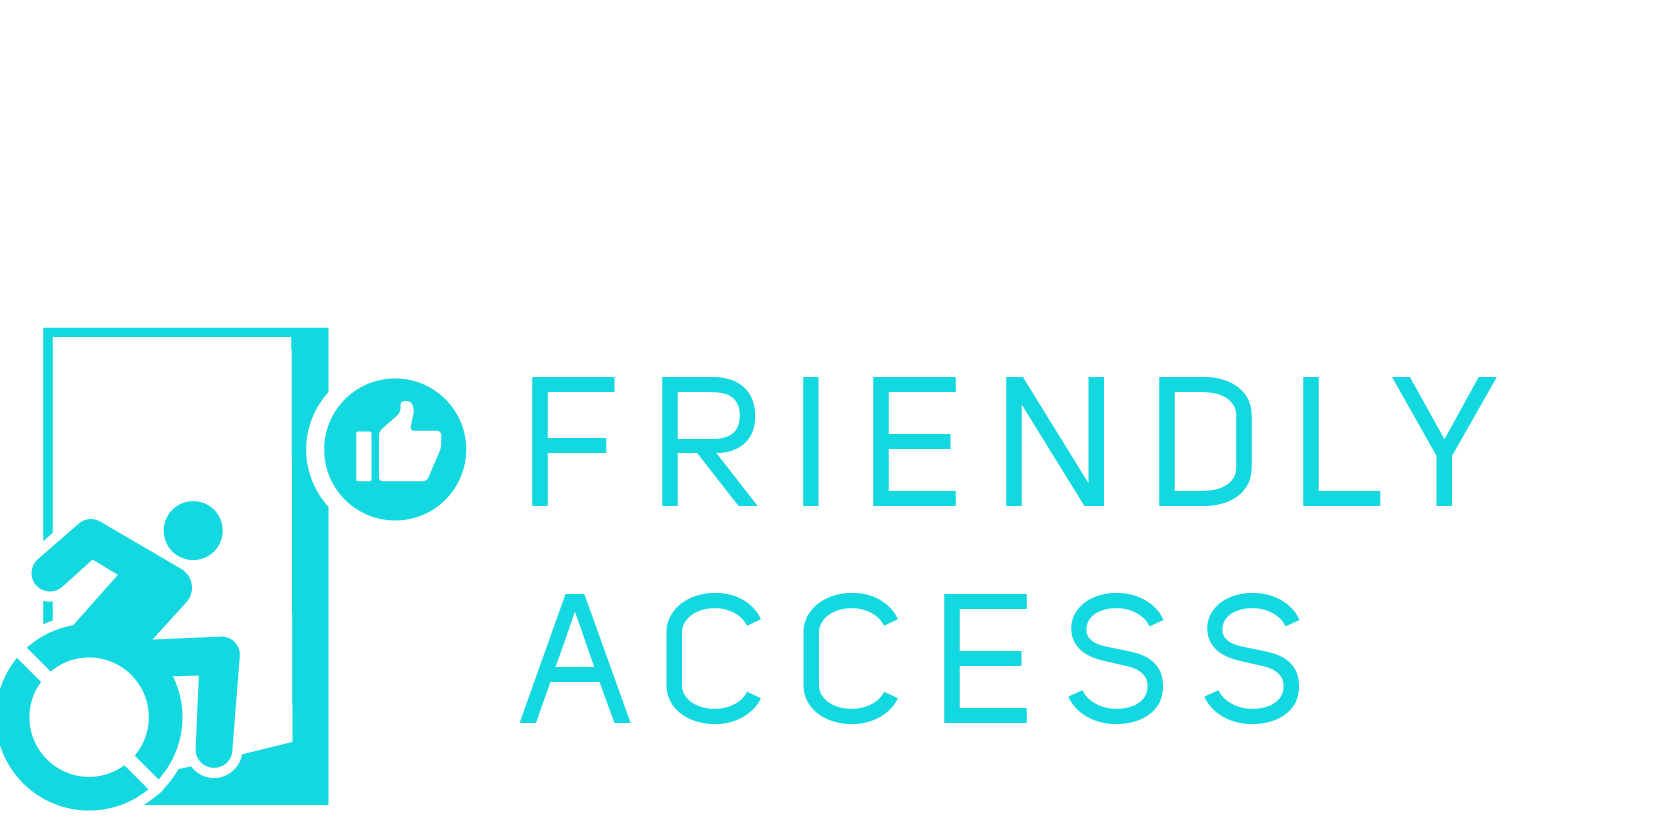 Friendly access